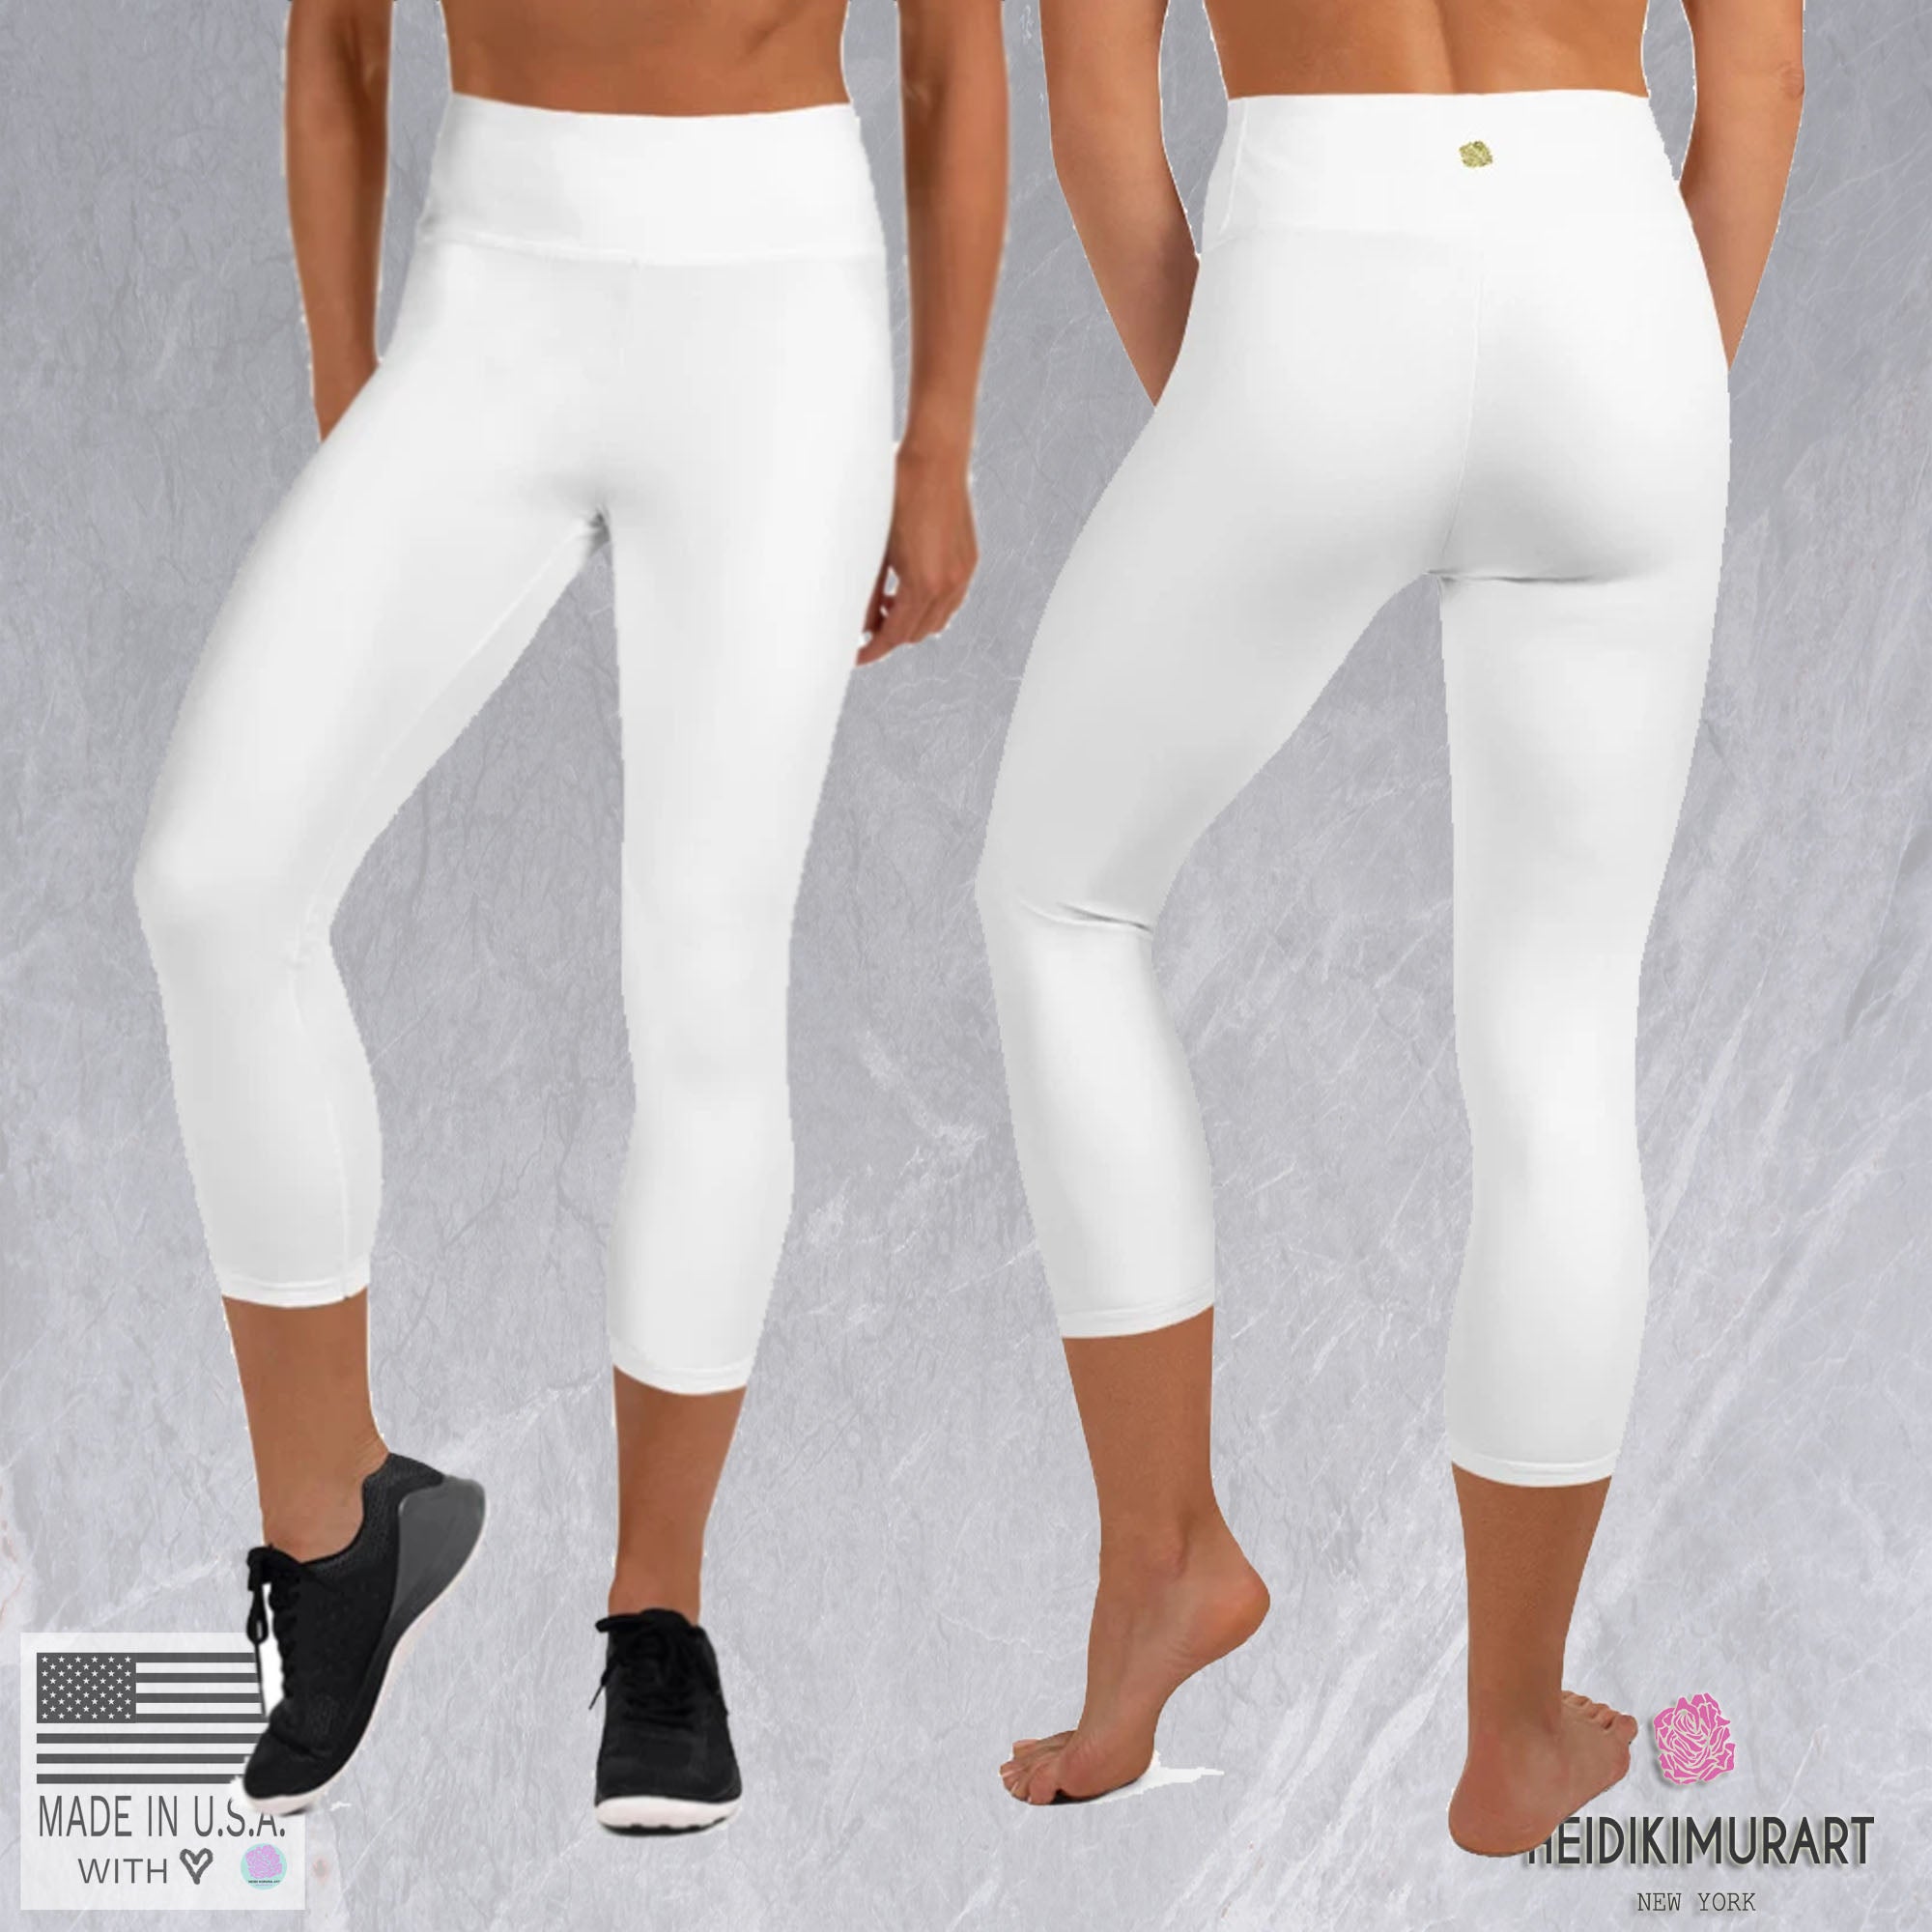  White Women's Capri Leggings, Bright Premium Quality Solid White Women's Yoga Capri Leggings Pants For Women, Made in USA/ Europe (US Size: XS-XL), White Yoga Leggings, Fun Workout Pants, Leggings And Yoga Pants, Cool Yoga Pants